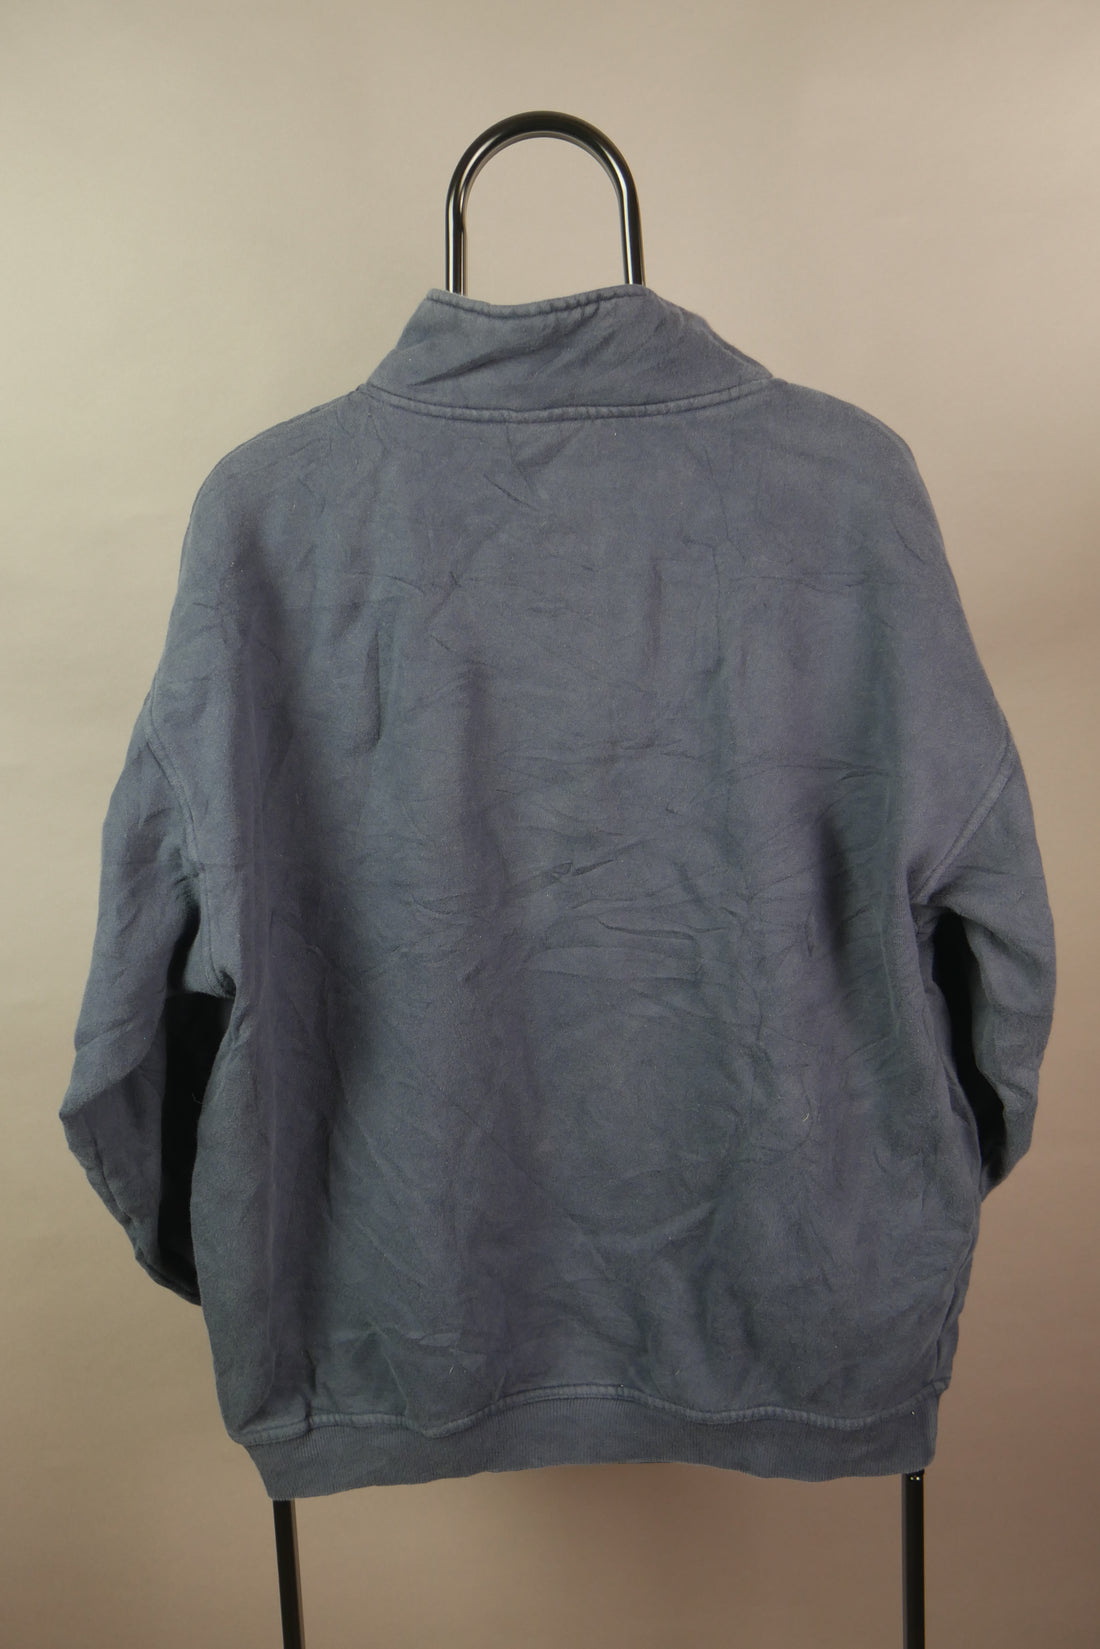 The Vintage Fila 1/4 Zip Sweatshirt (L)